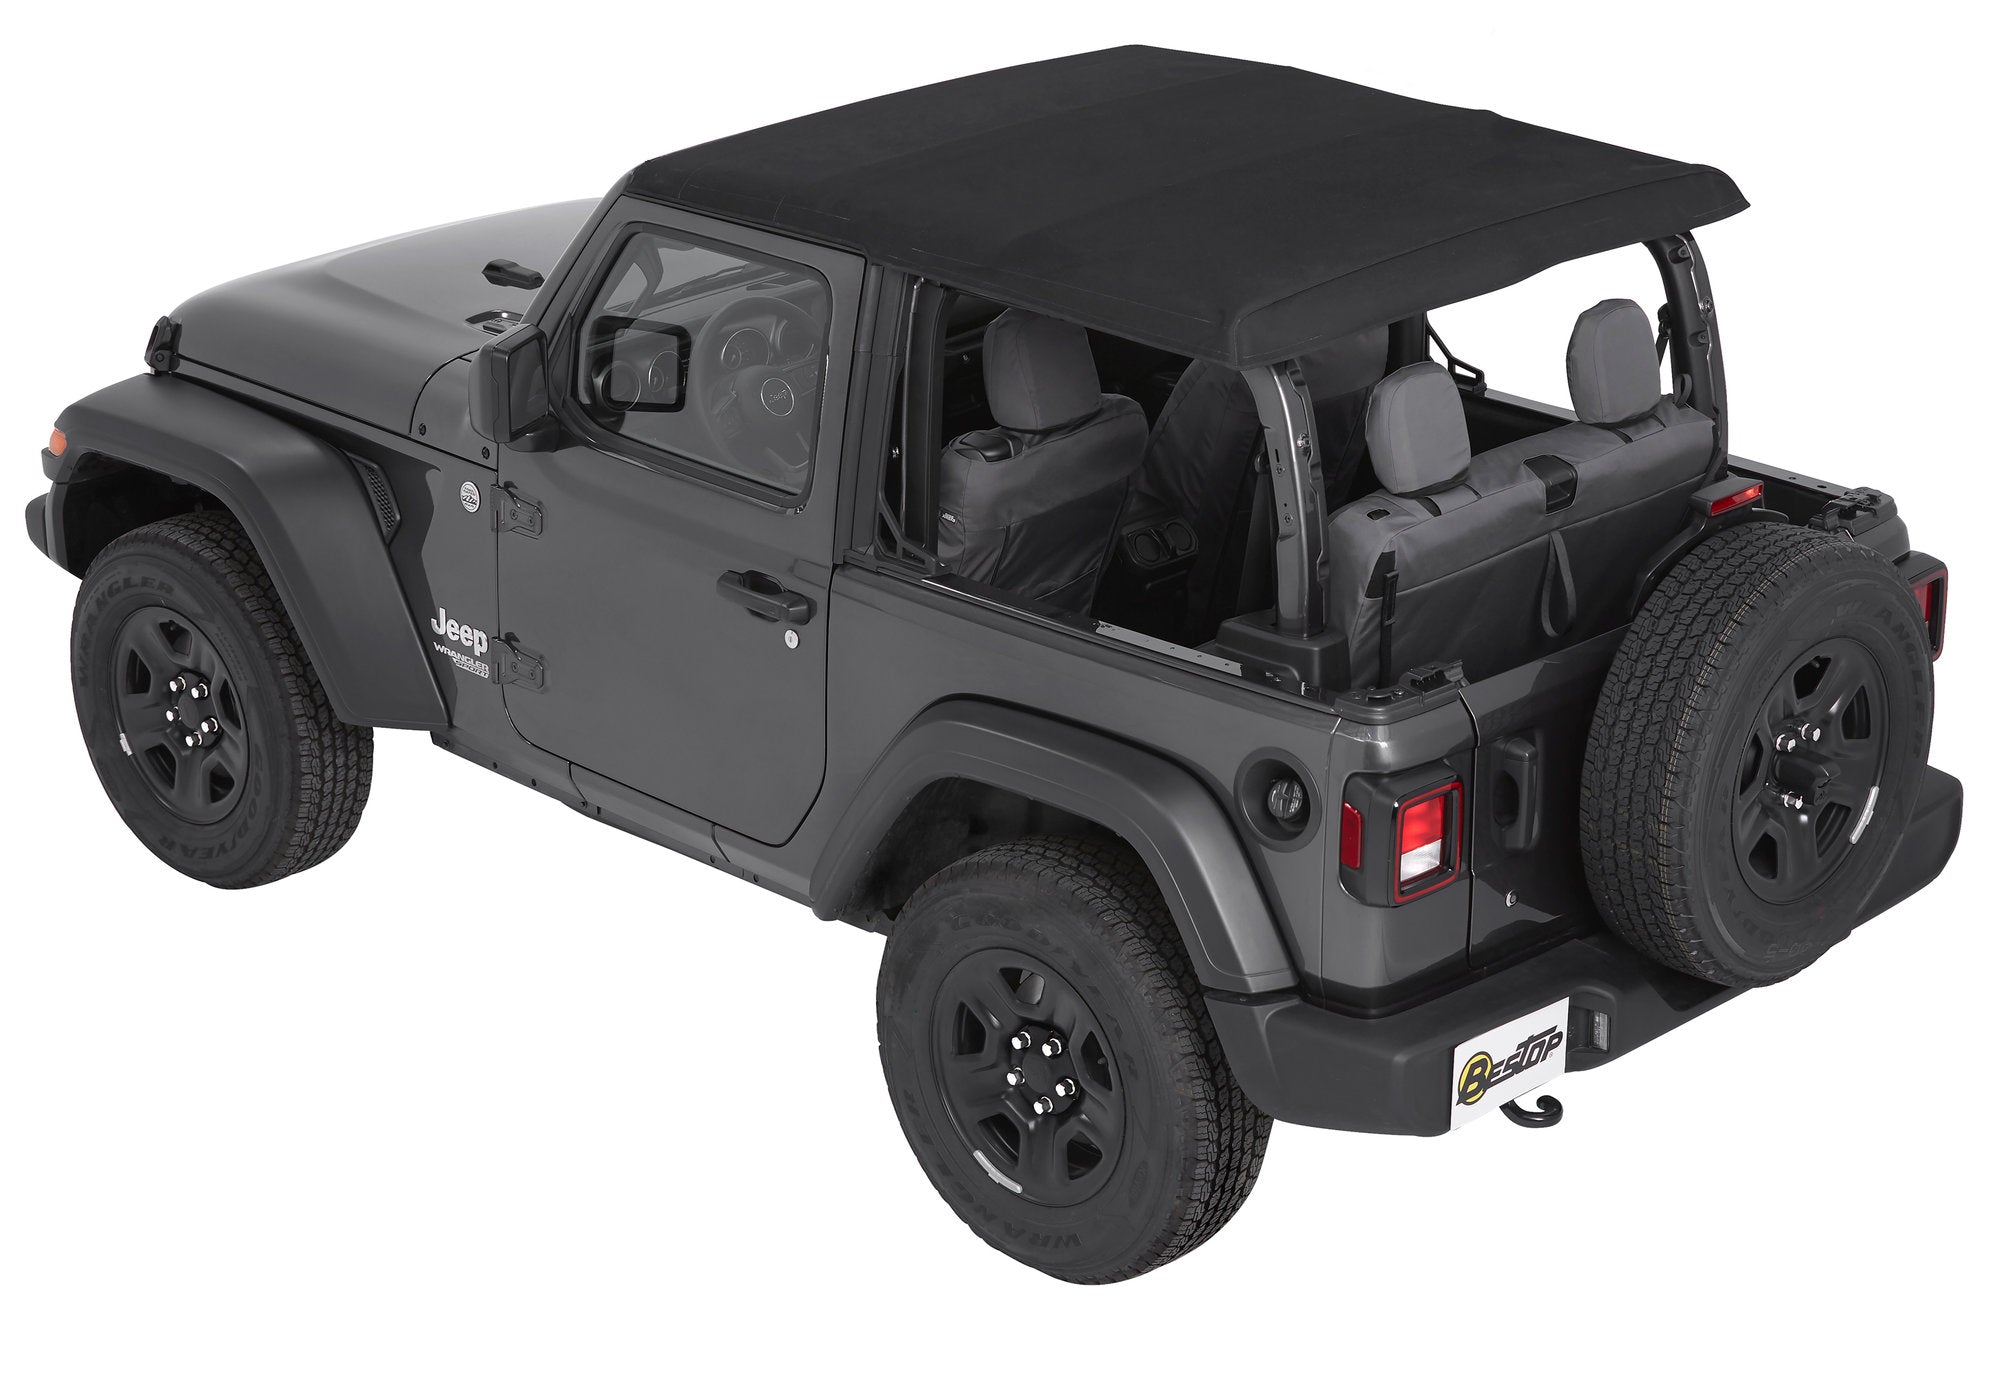 Trektop NX Soft Top from Bestop for Jeep Wrangler JL – am-wrangler